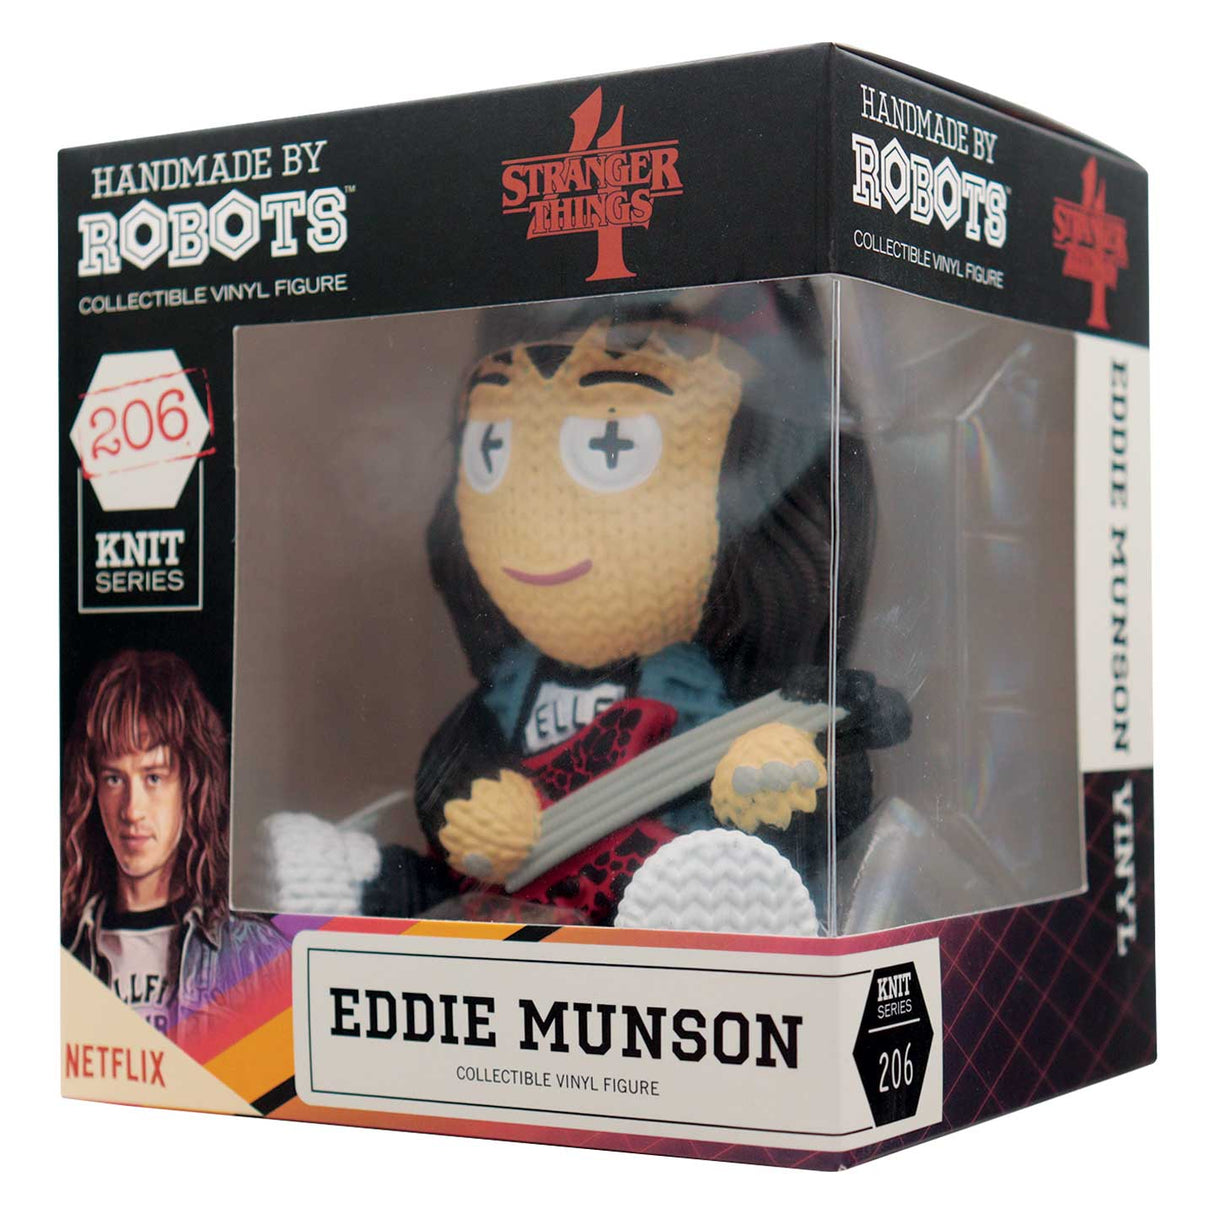 Eddie Munson | Stranger Things | Handmade by Robots | Vinyl Figure | Knit Series #206